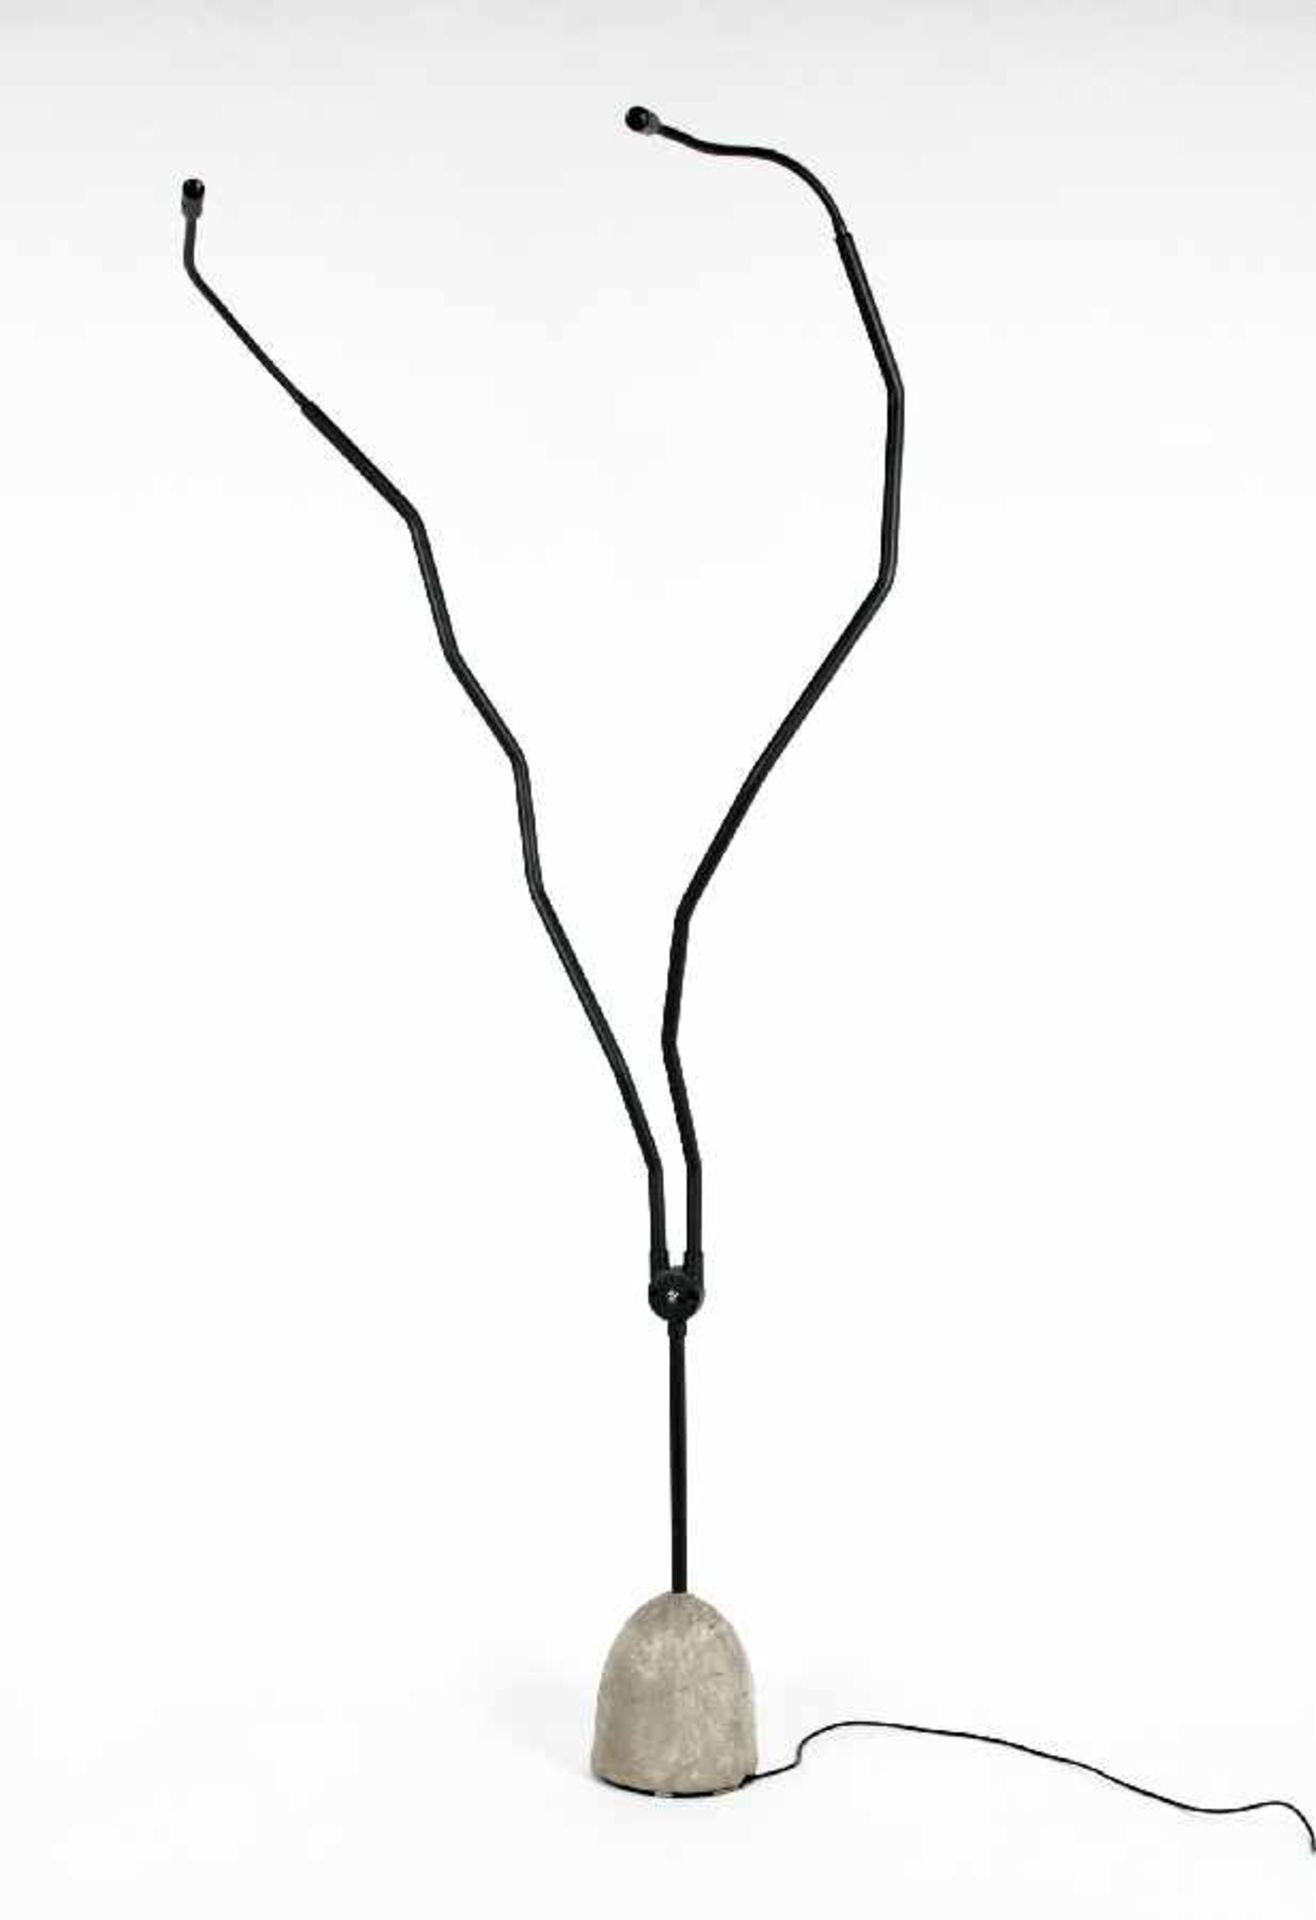 Ron Arad1951Tree lampStahl, lackiert, Zement, 80er Jahre; H 190 cm; Hersteller: Zeus MilanoRon